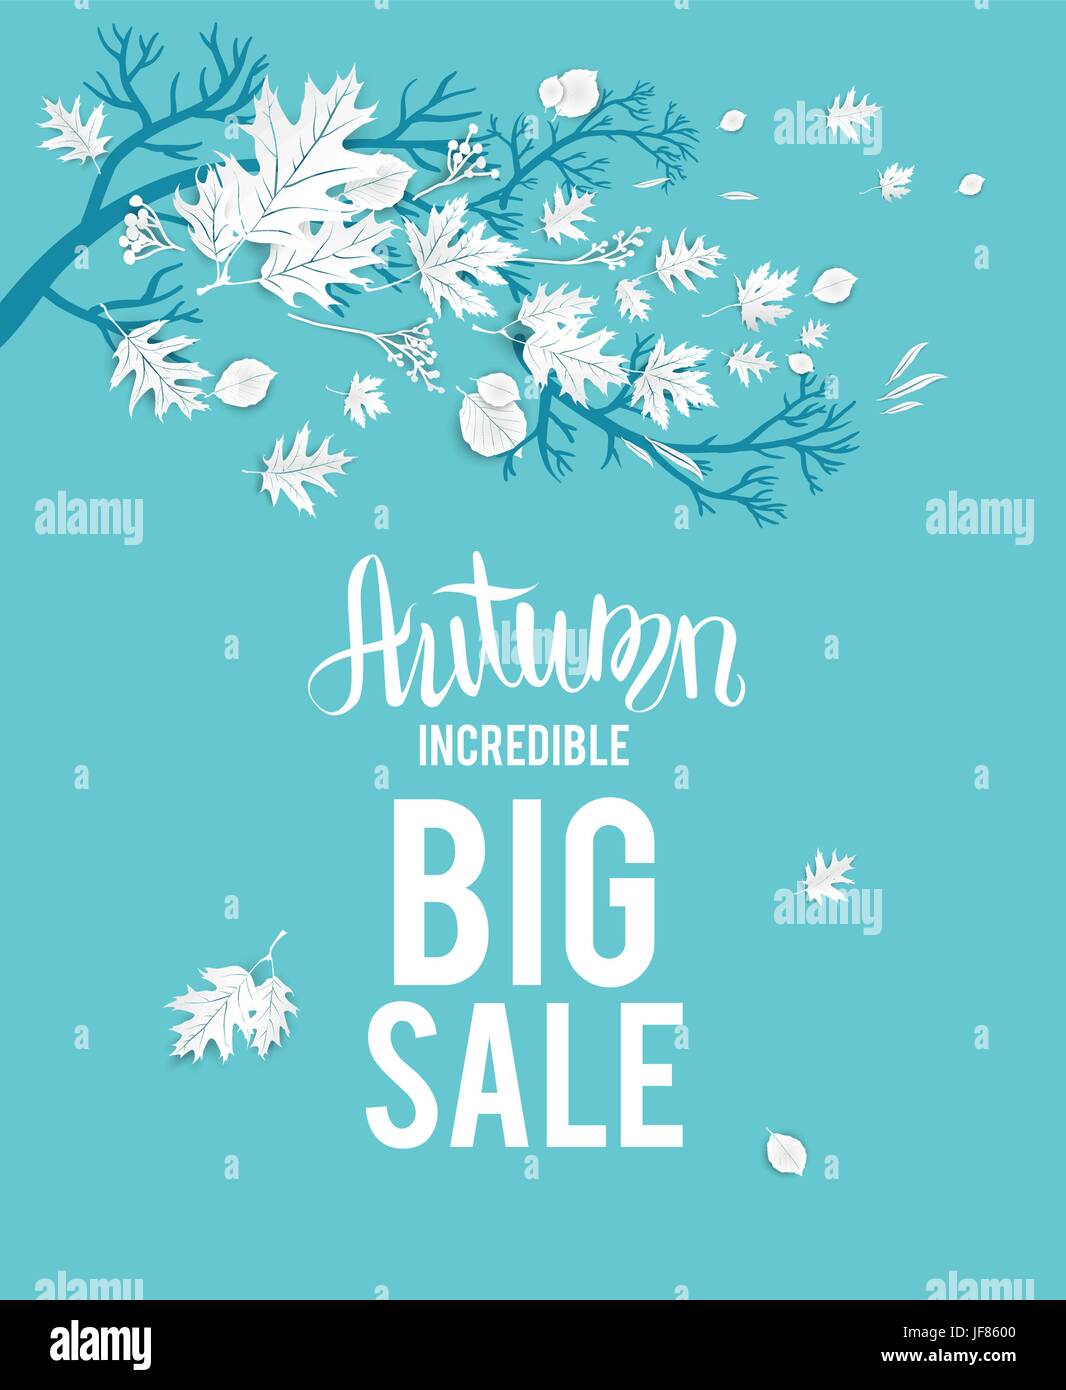 Autumn sale image Stock Vector